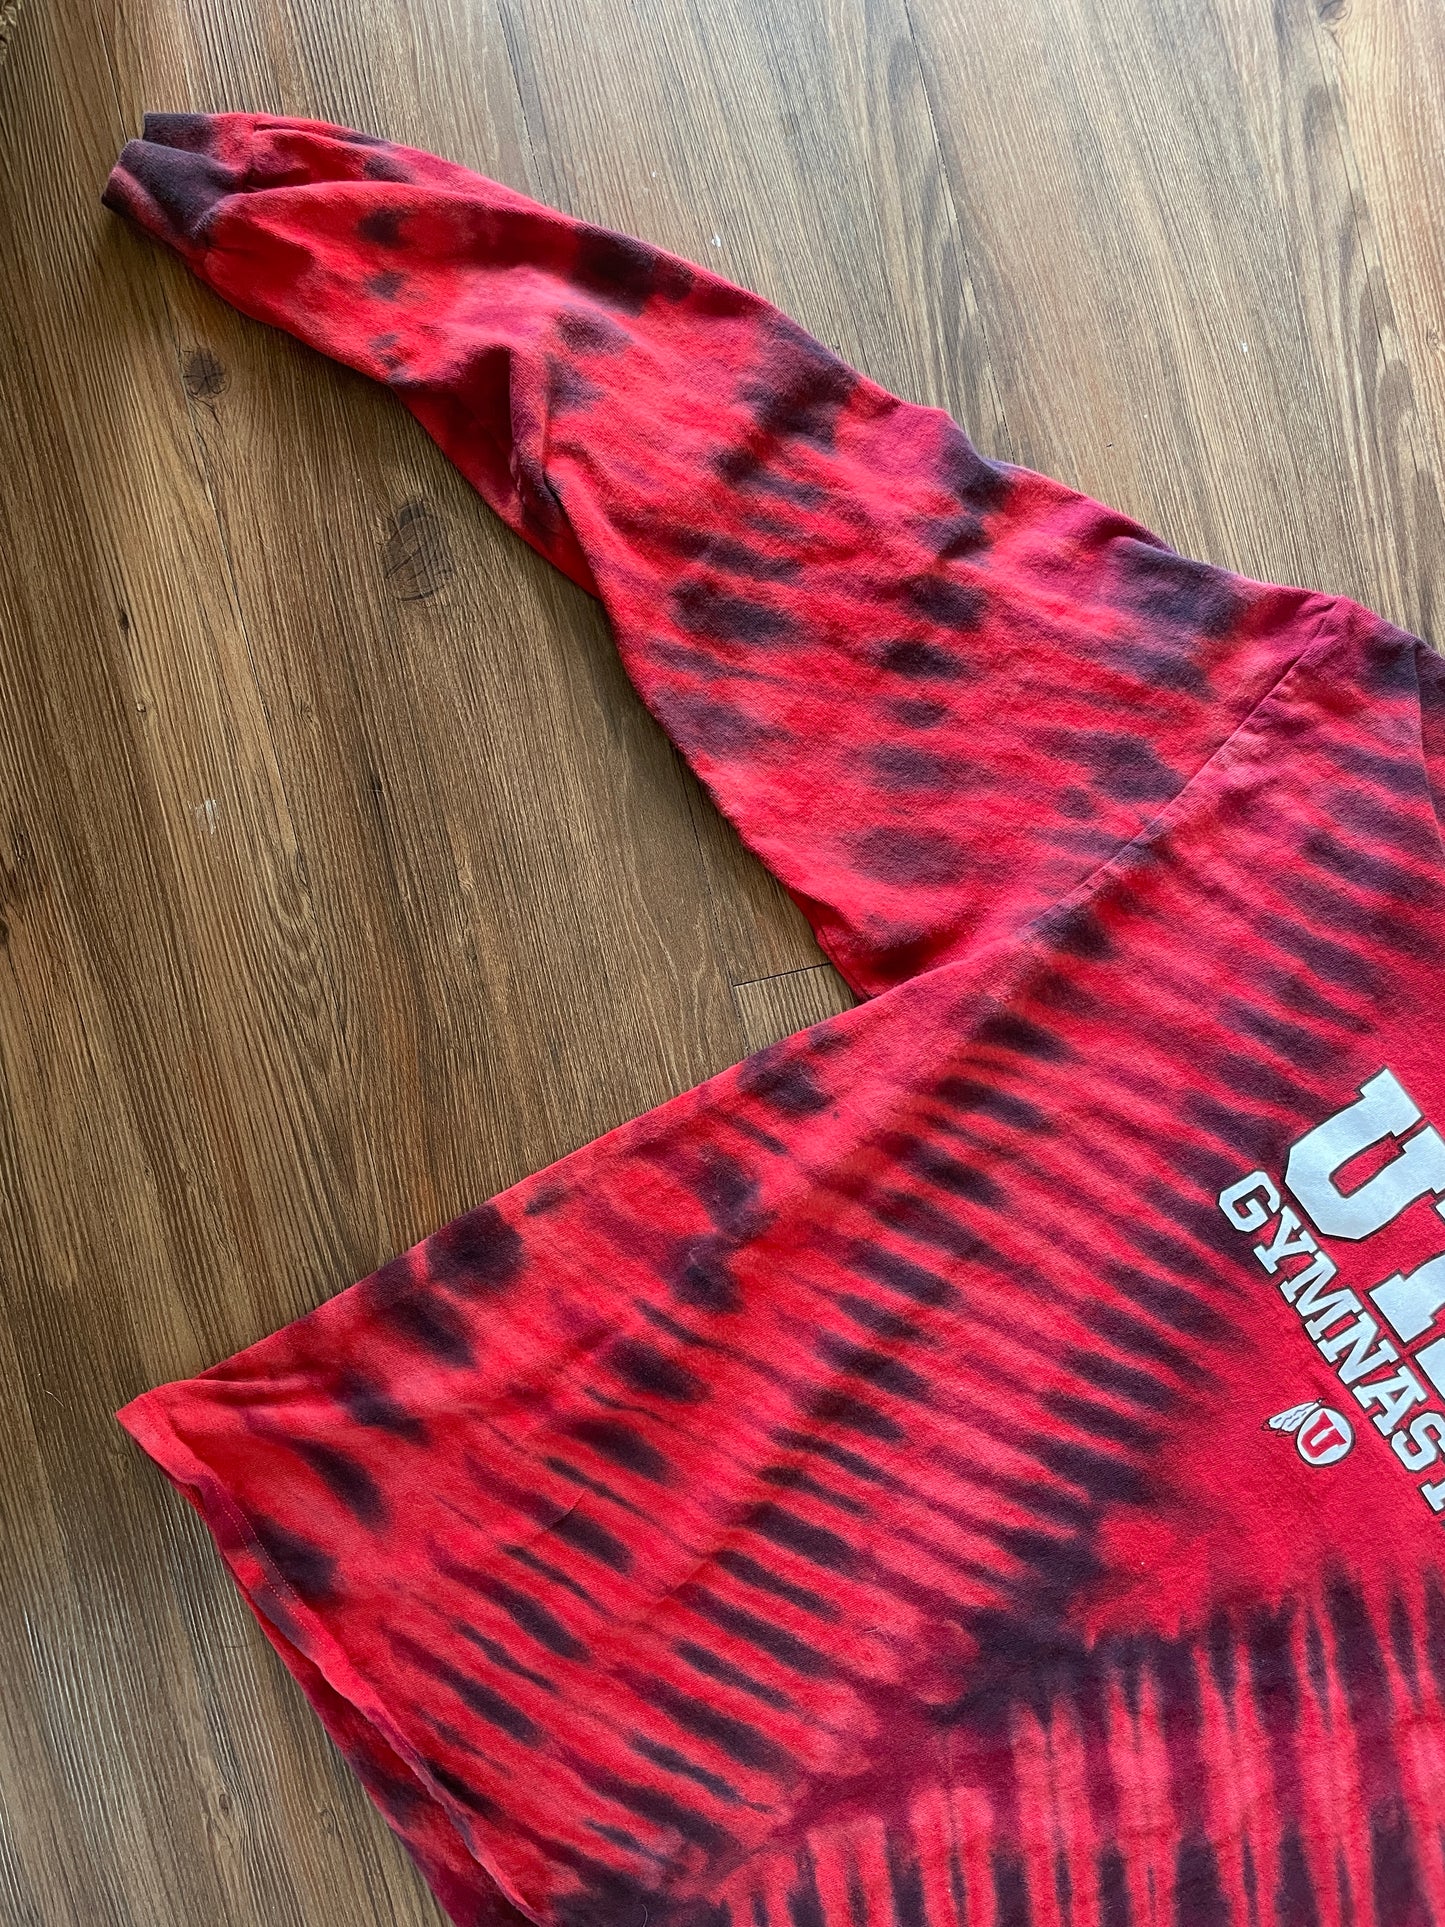 XXL Men’s Utah Gymnastics Handmade Tie Dye T-Shirt | Red and Black V-Pleated Tie Dye Long Sleeve